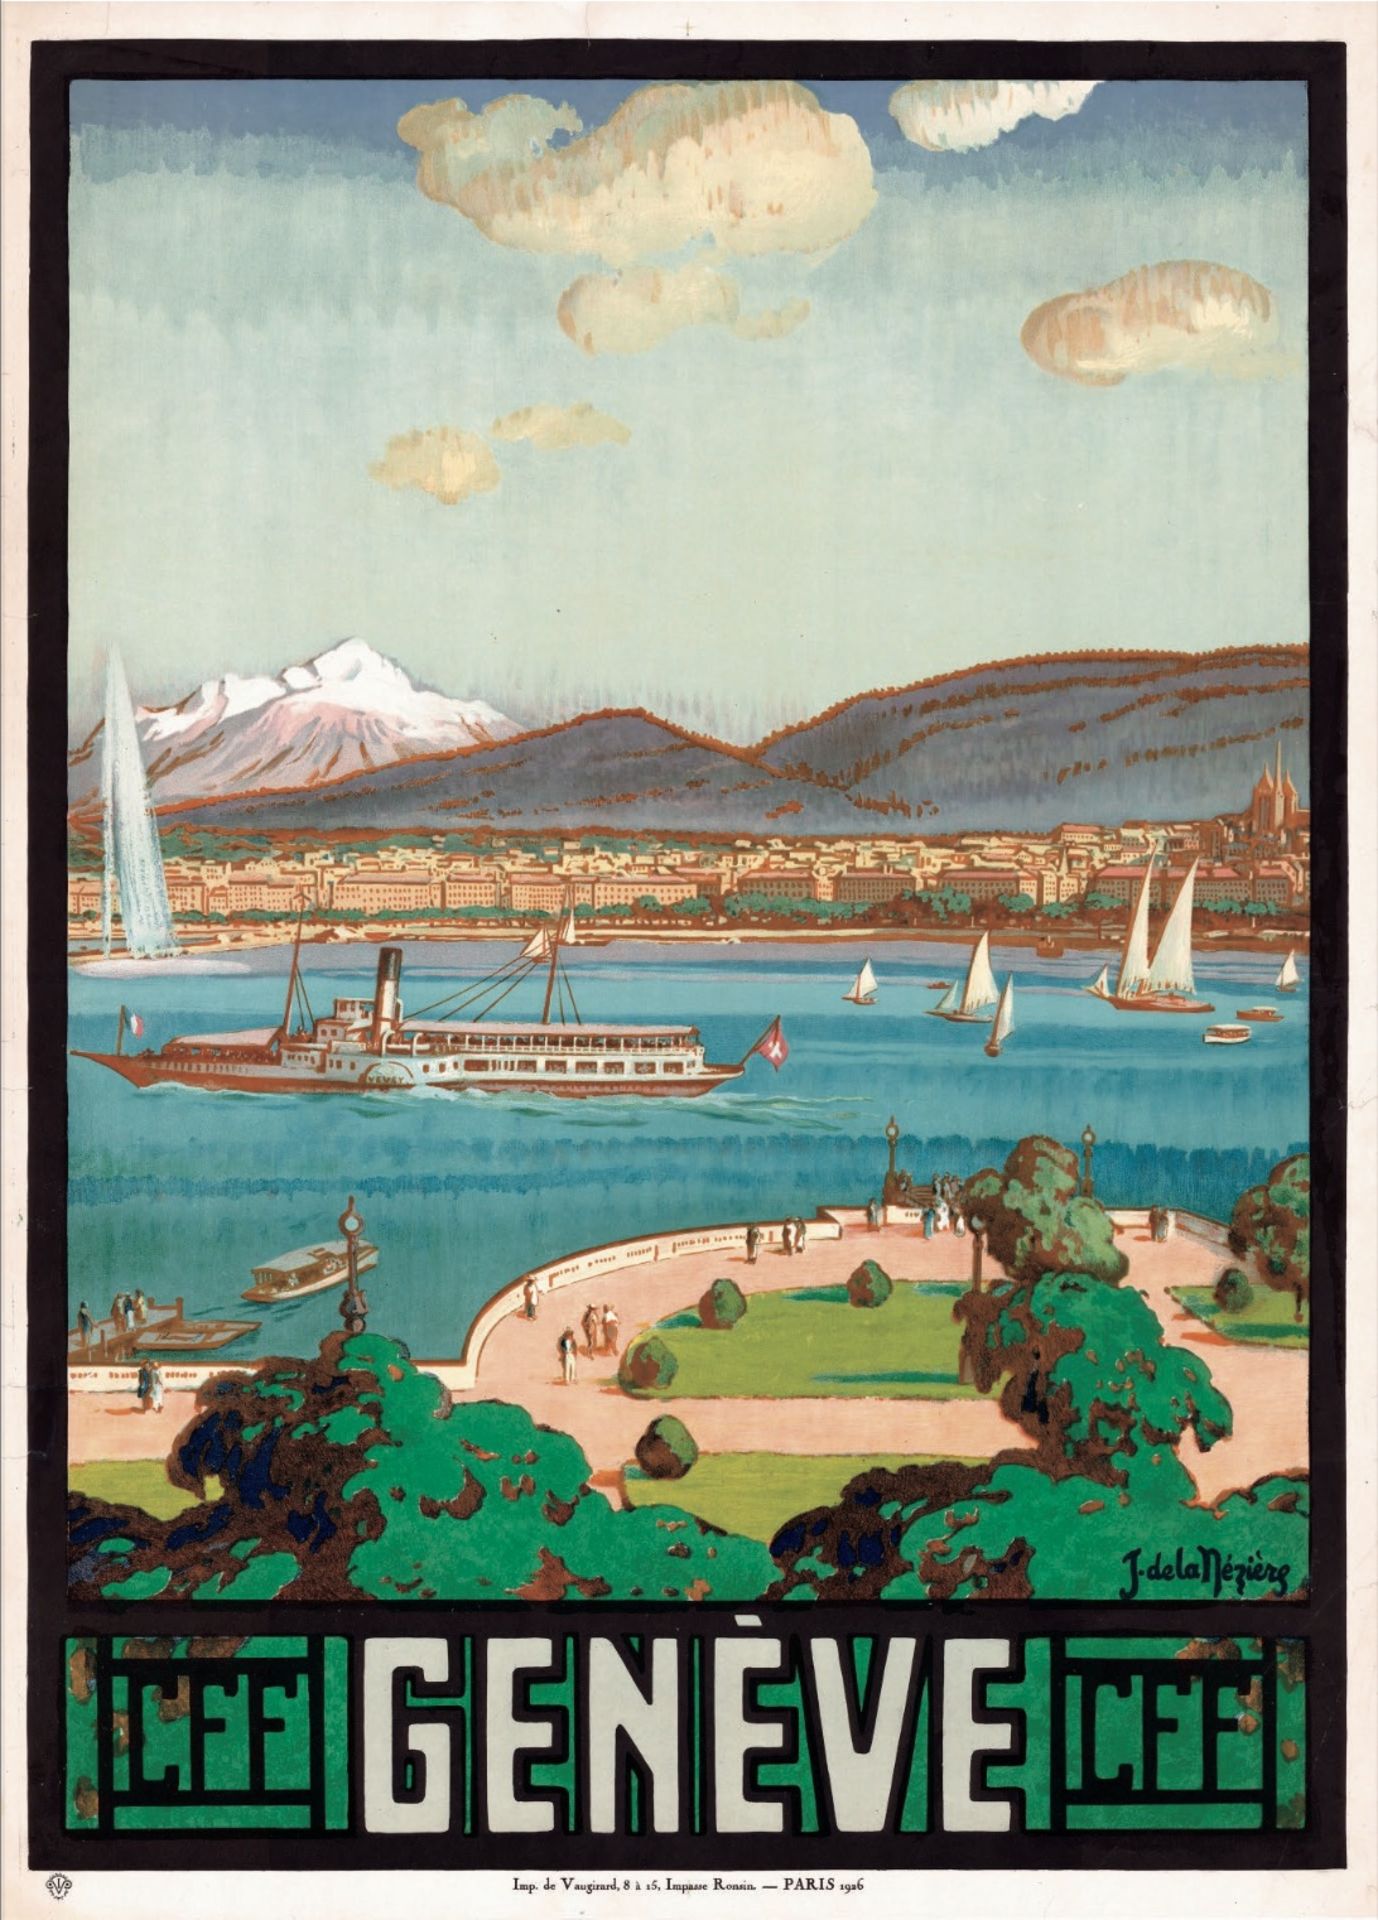 Geneve, Switzerland Travel Poster